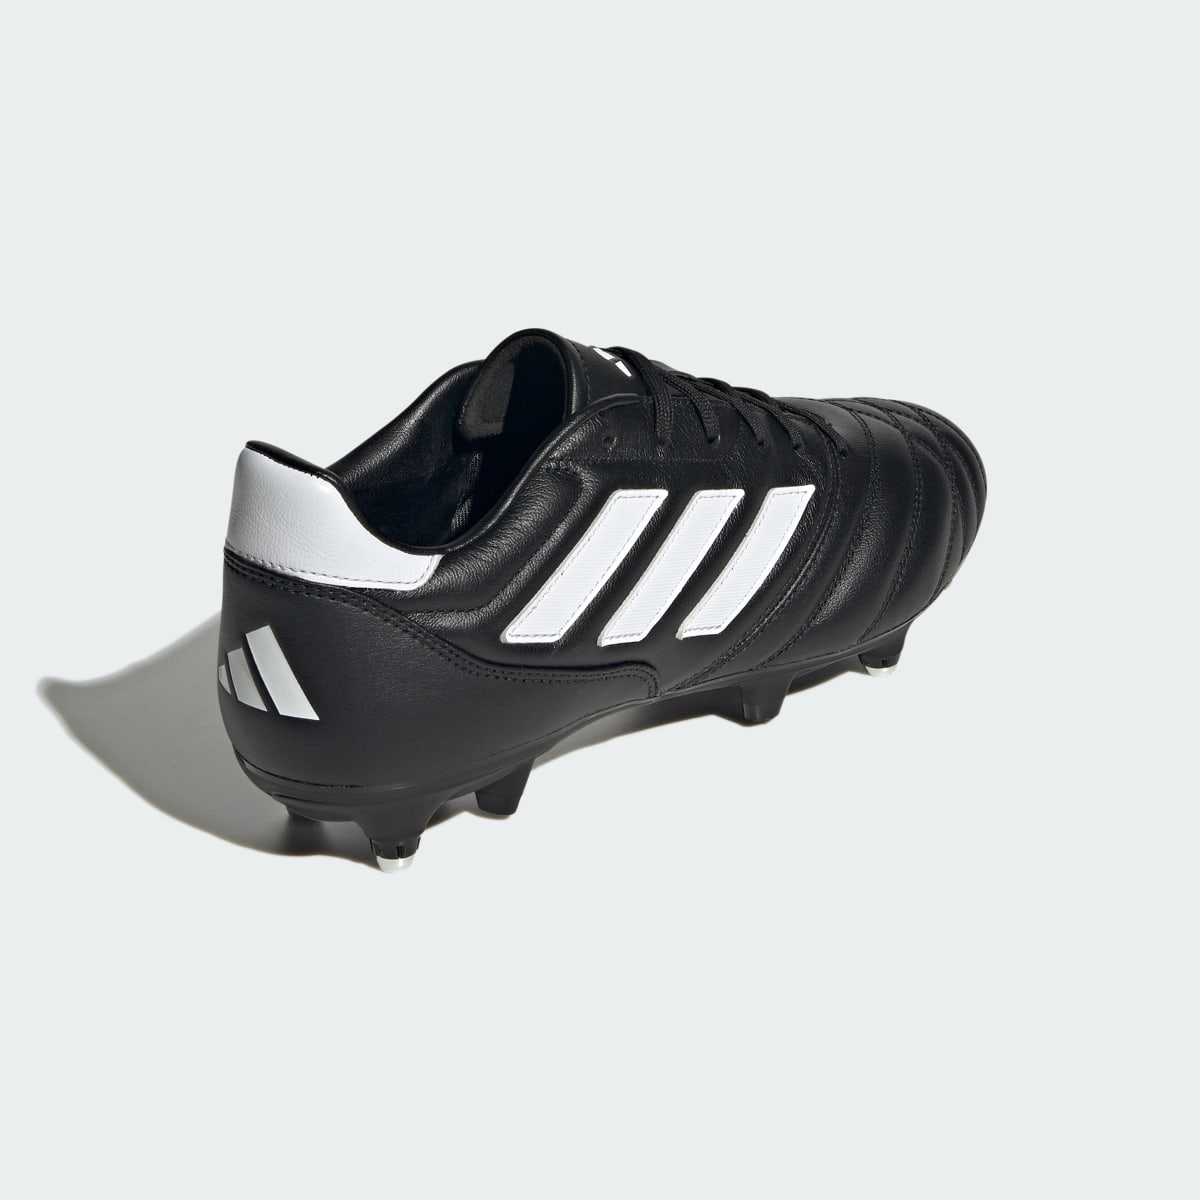 Adidas Copa Gloro Soft Ground Boots. 6